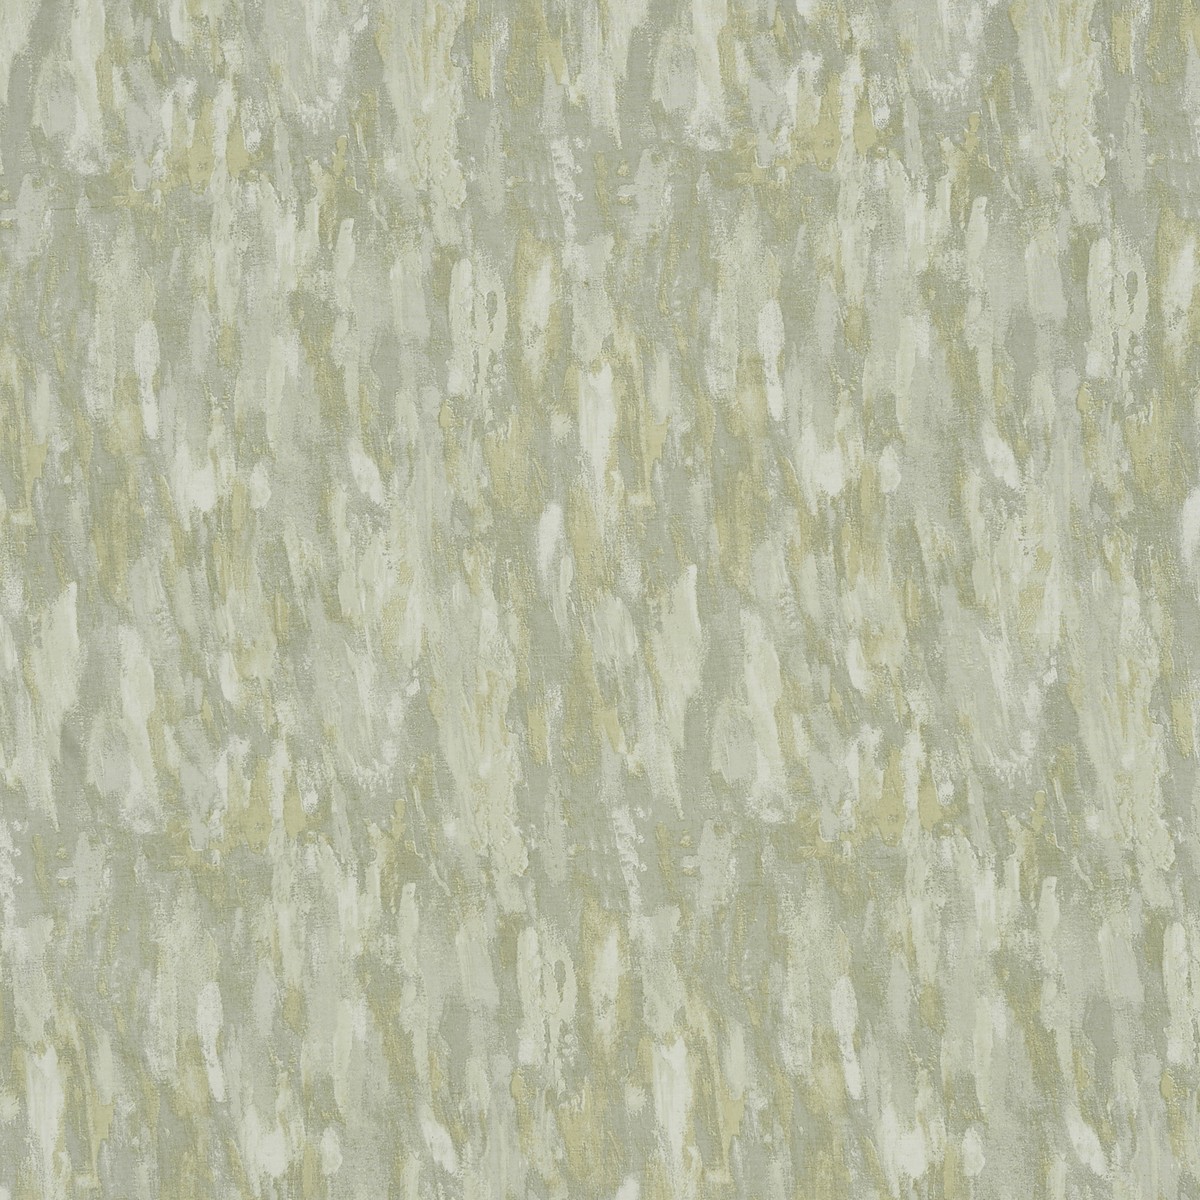 Aspen Tundra Fabric by Prestigious Textiles